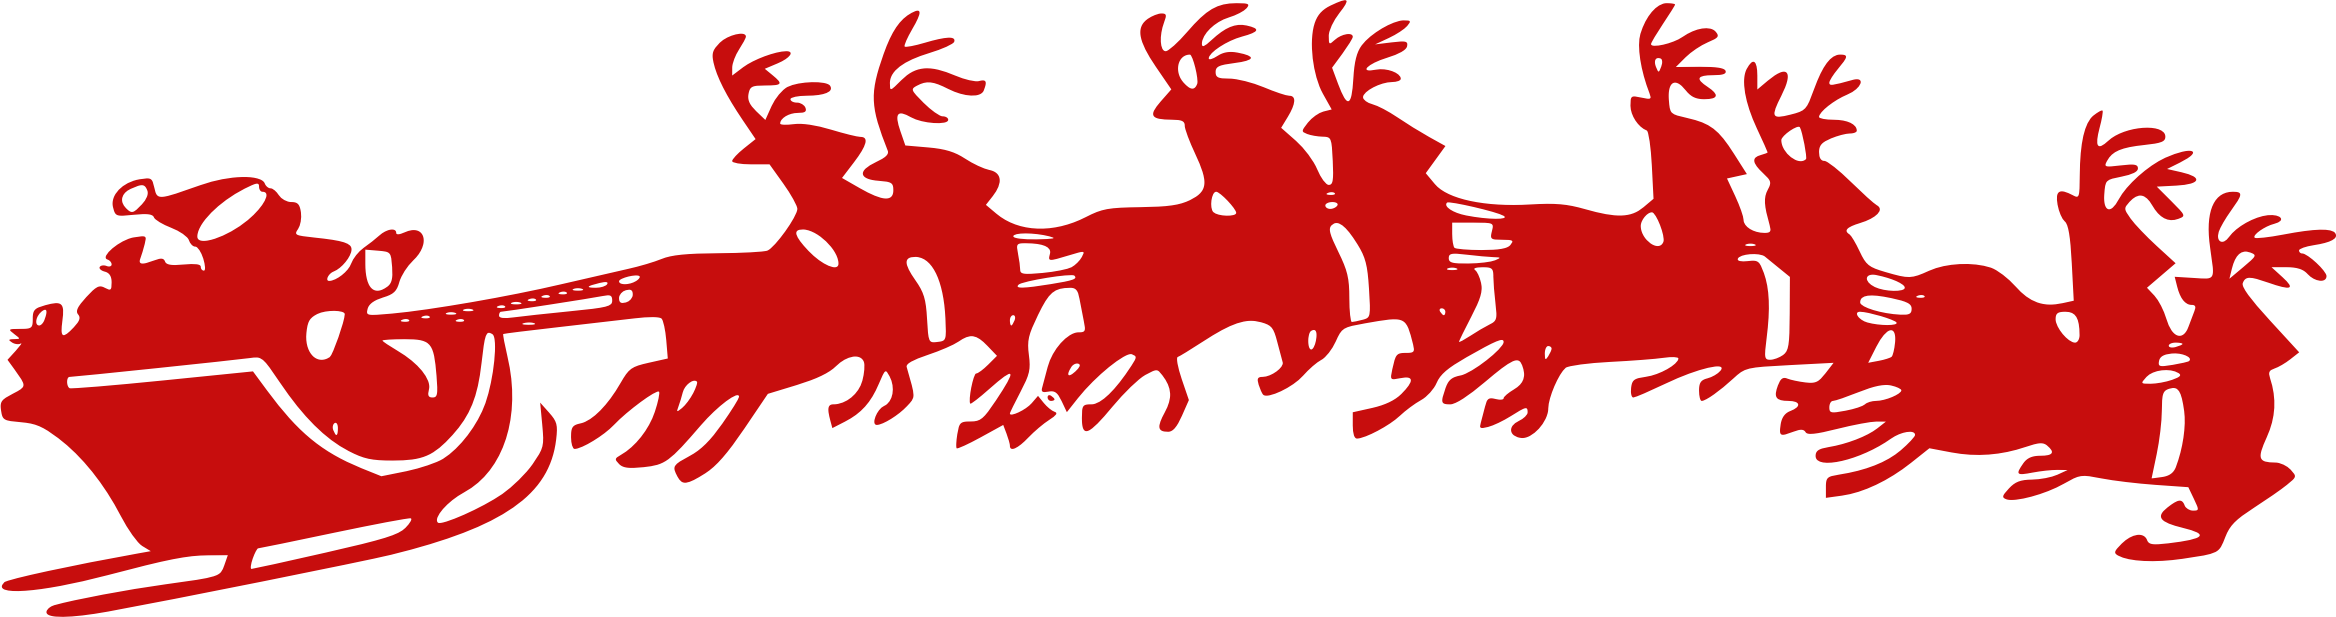 Reindeer Sleigh Red Silhouette PNG